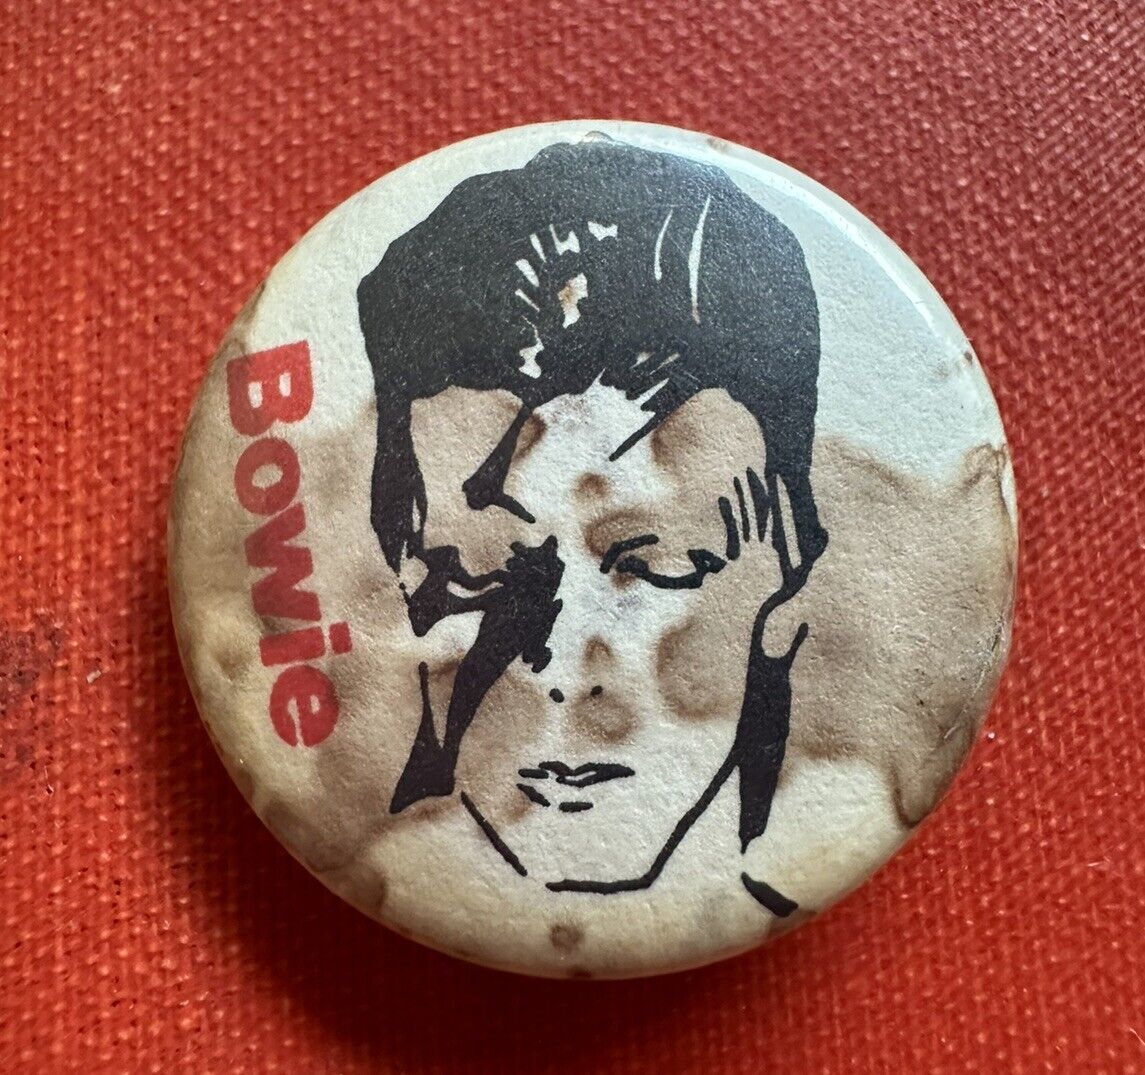 Vintage Aladdin Sane David Bowie pin button badge ( as is )